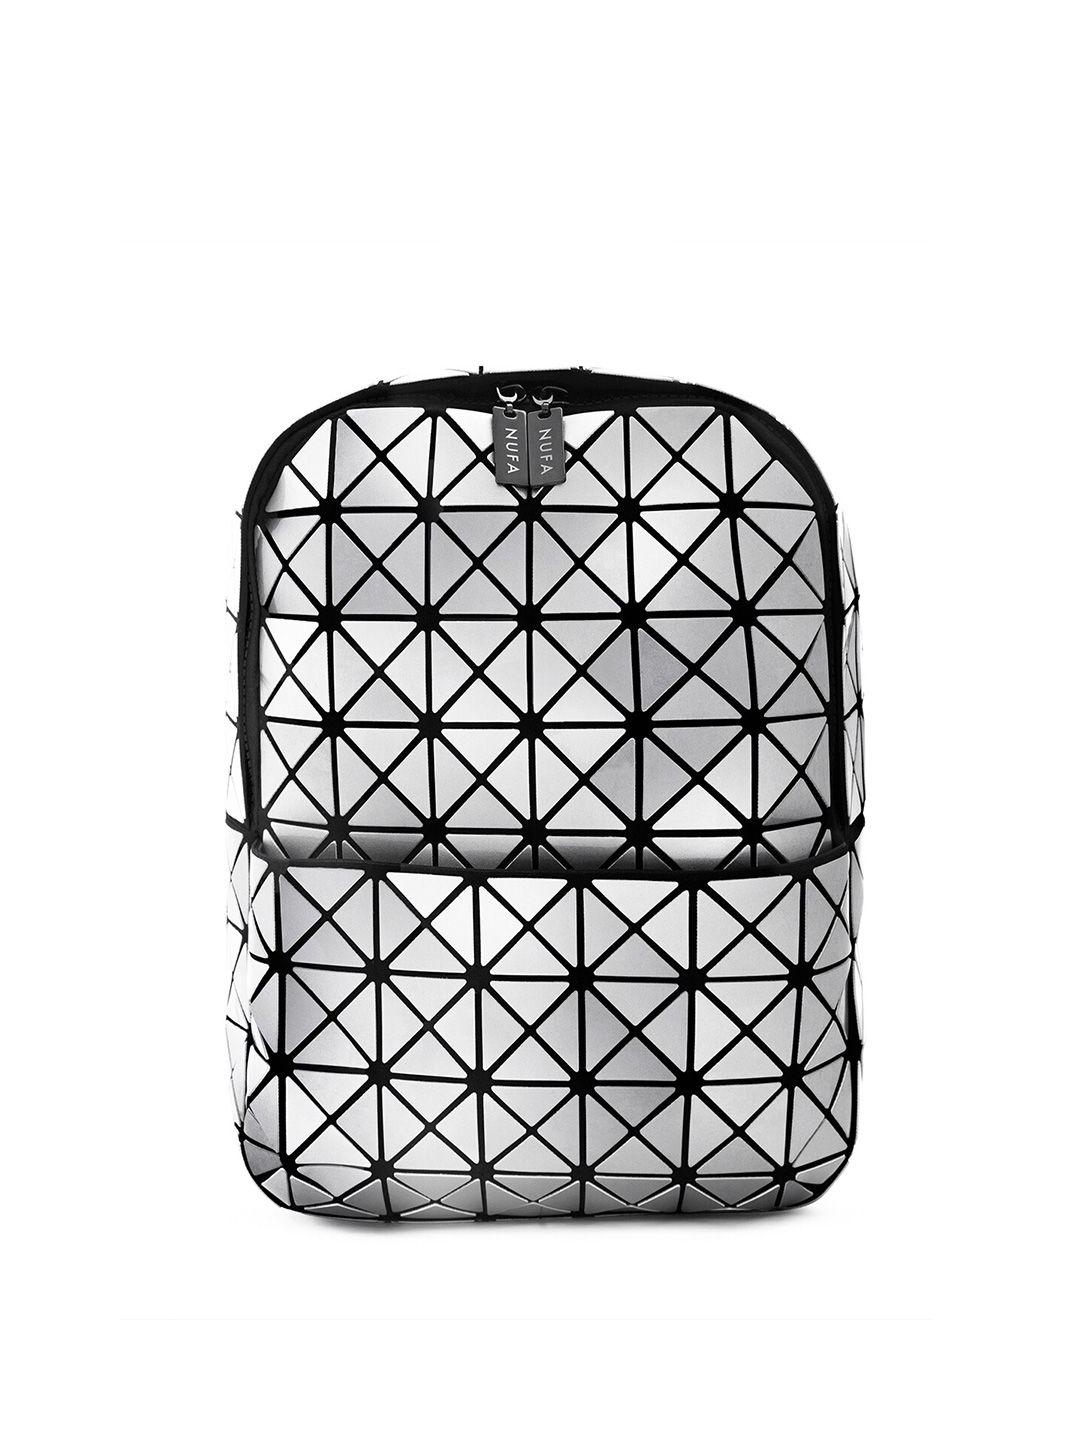 nufa unisex silver-toned & black geometric backpack